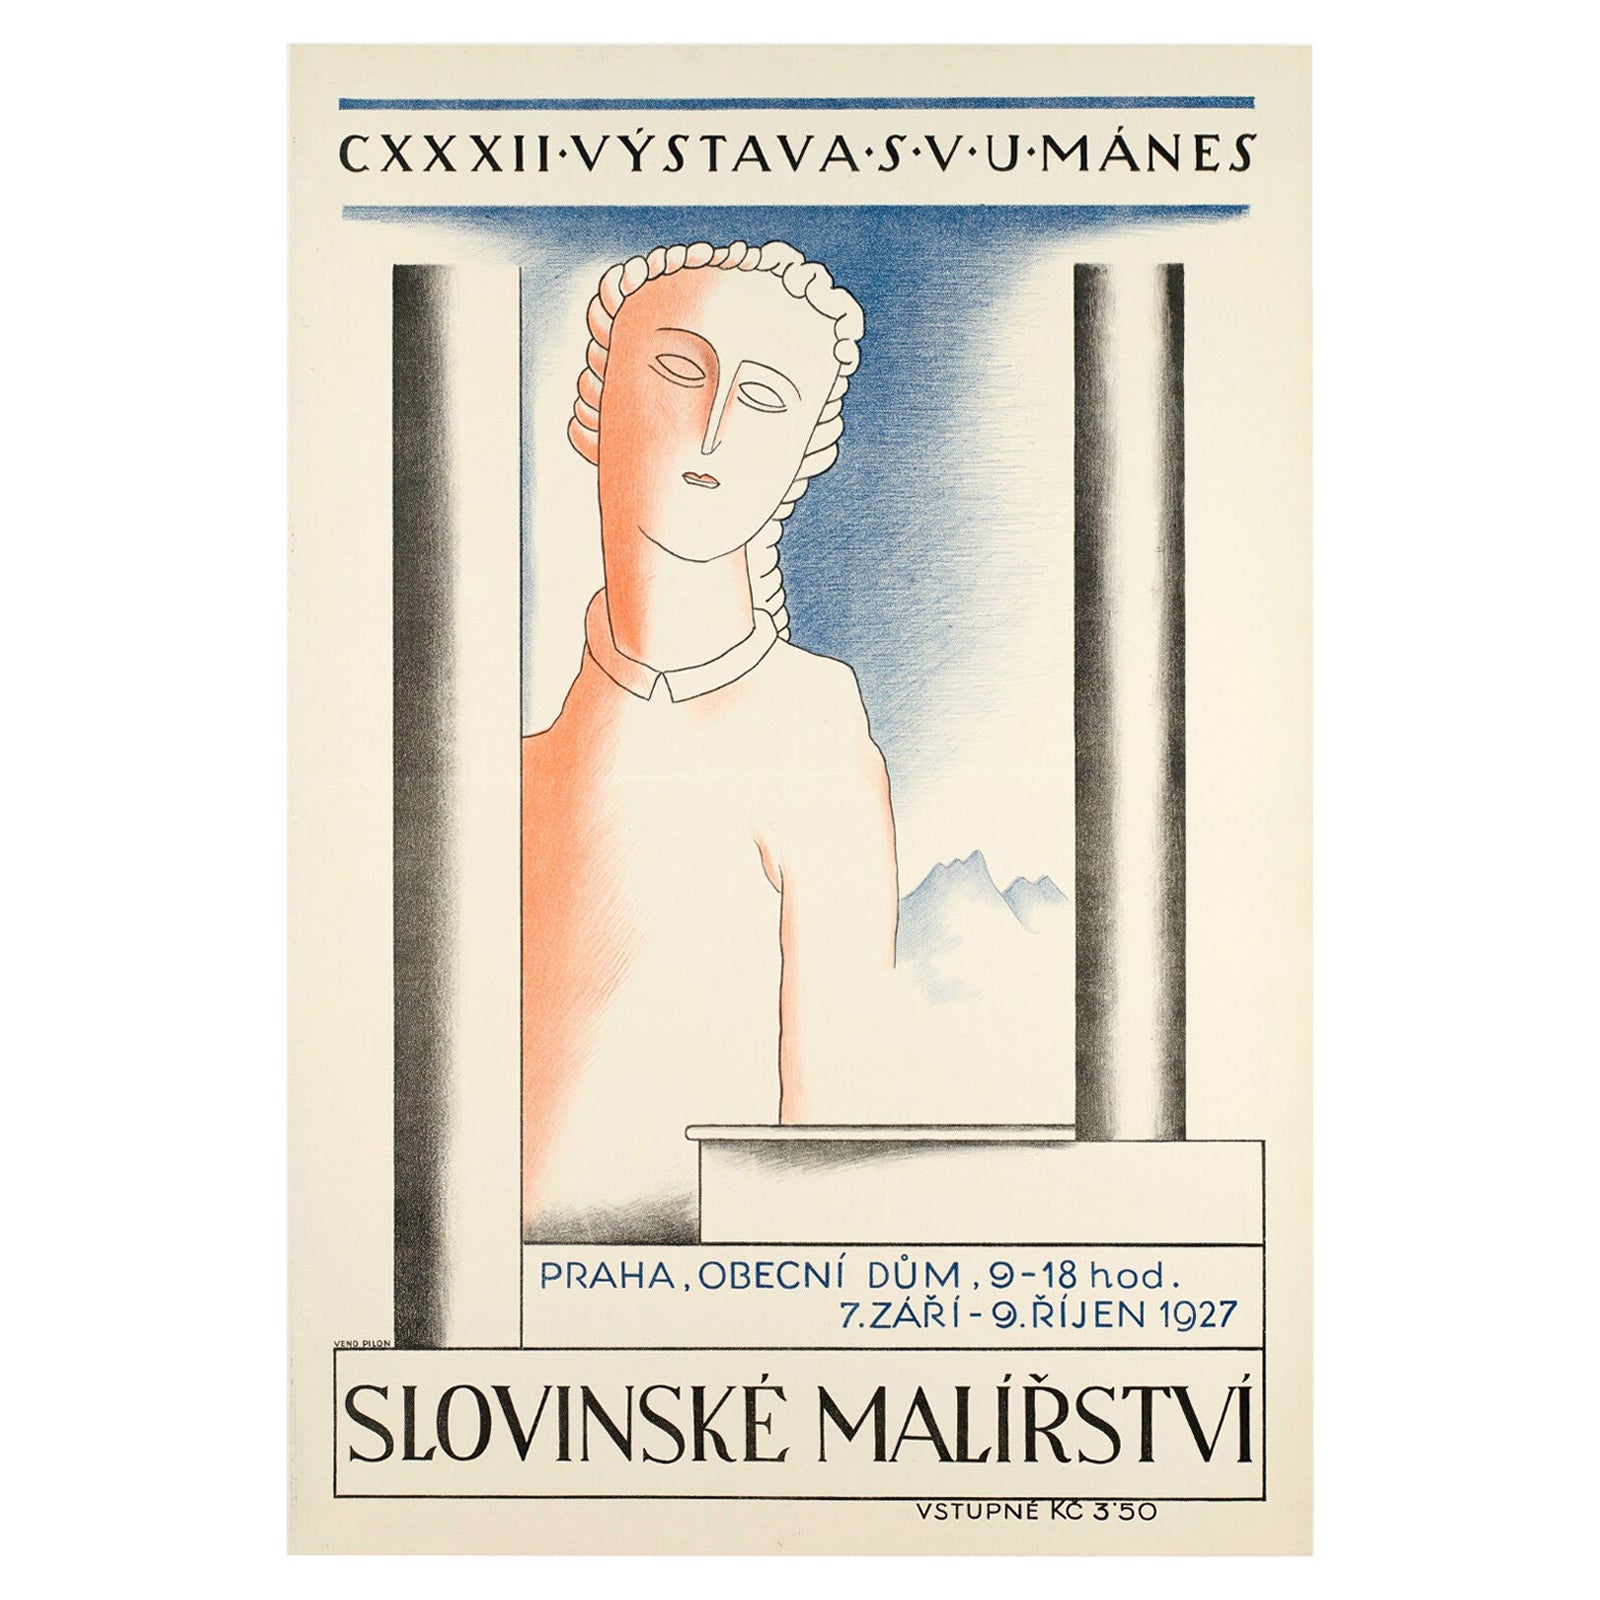 Original Vintage Poster-Veino Pilon-Slovenian Art and Painting-Prague, 1927 For Sale